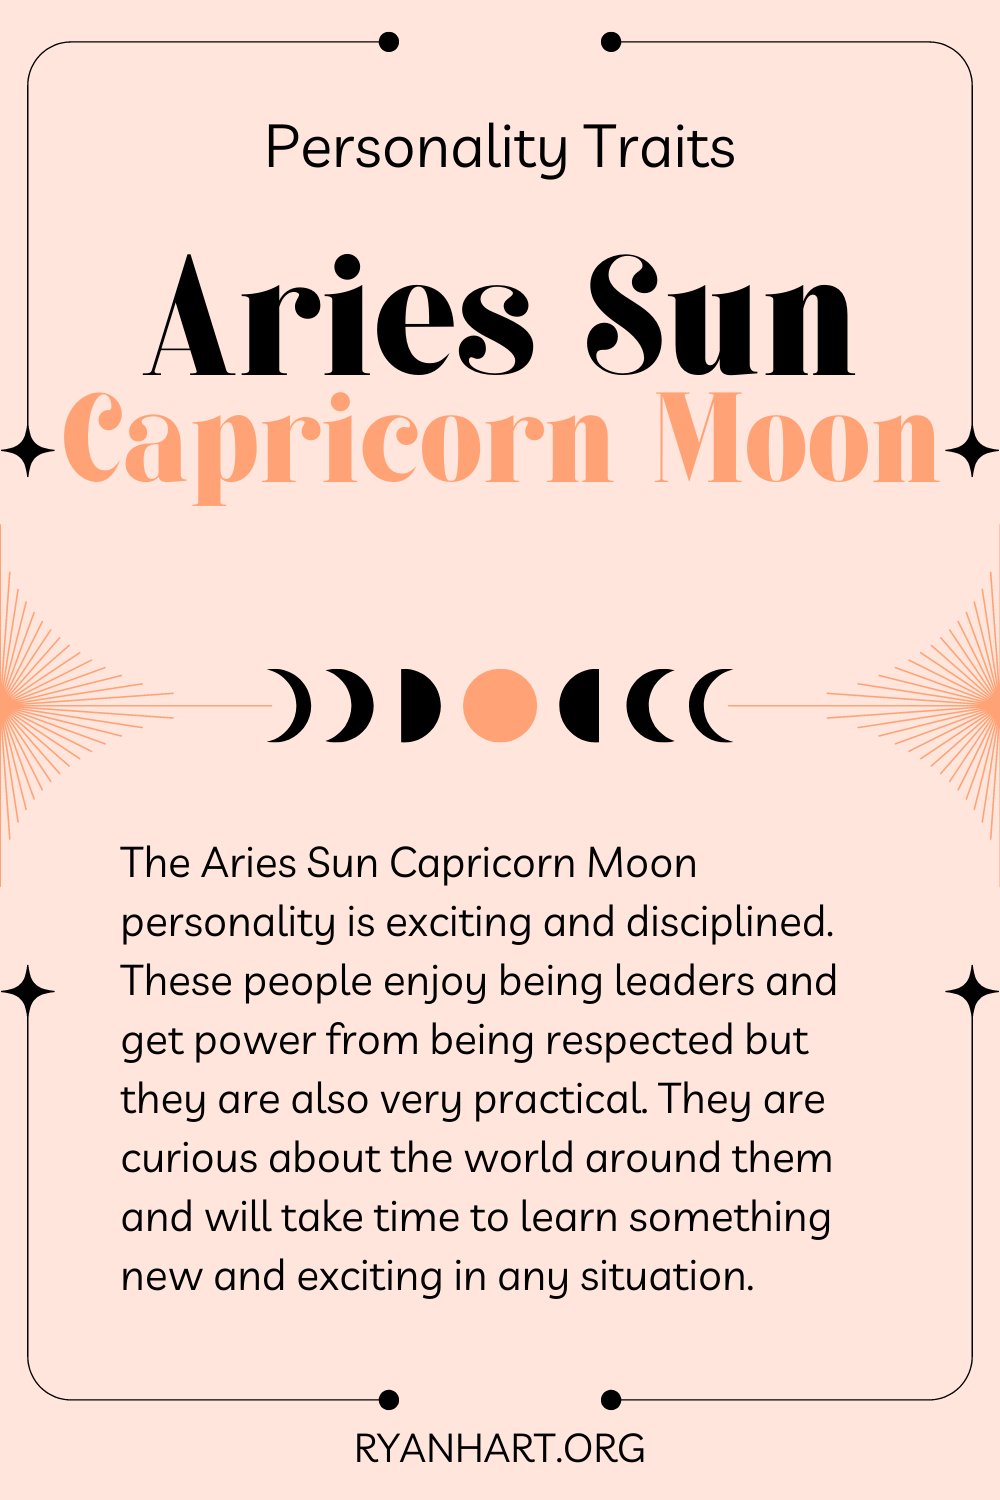 Aries Sun Capricorn Moon Description